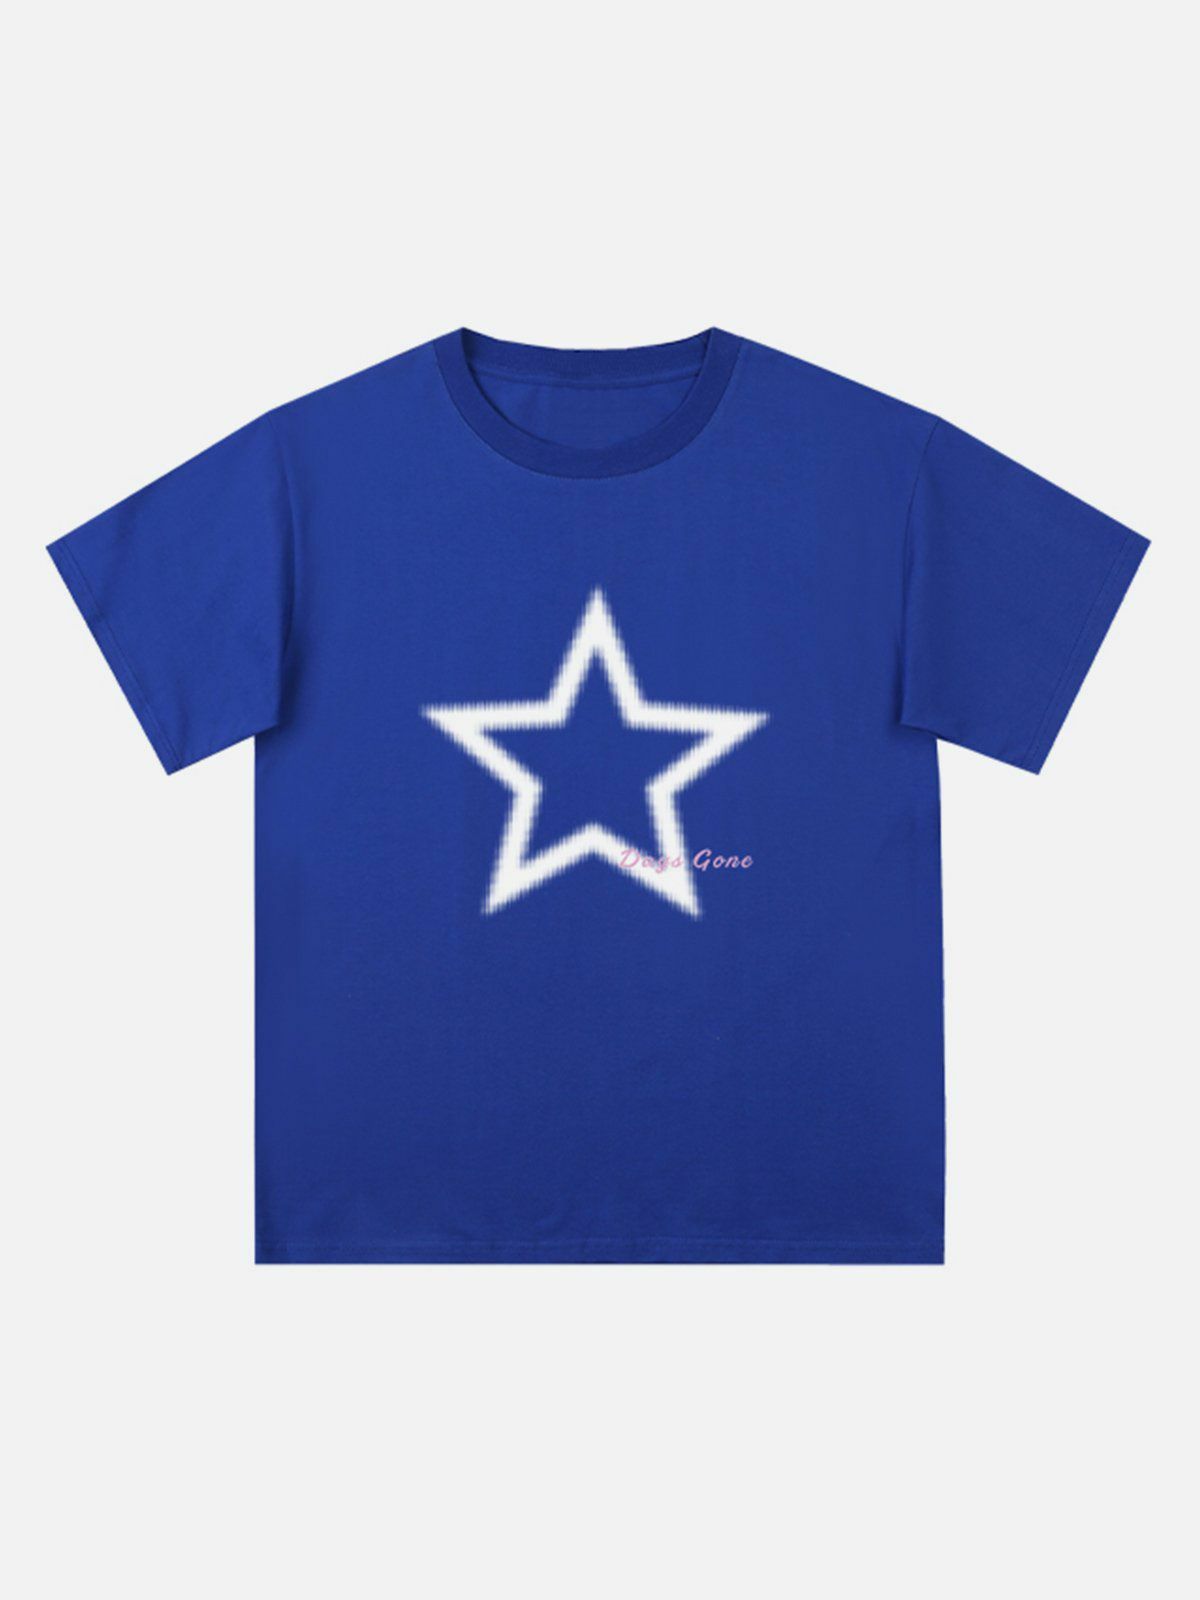 playful star print tee edgy  retro shirt for youthful streetwear 4575